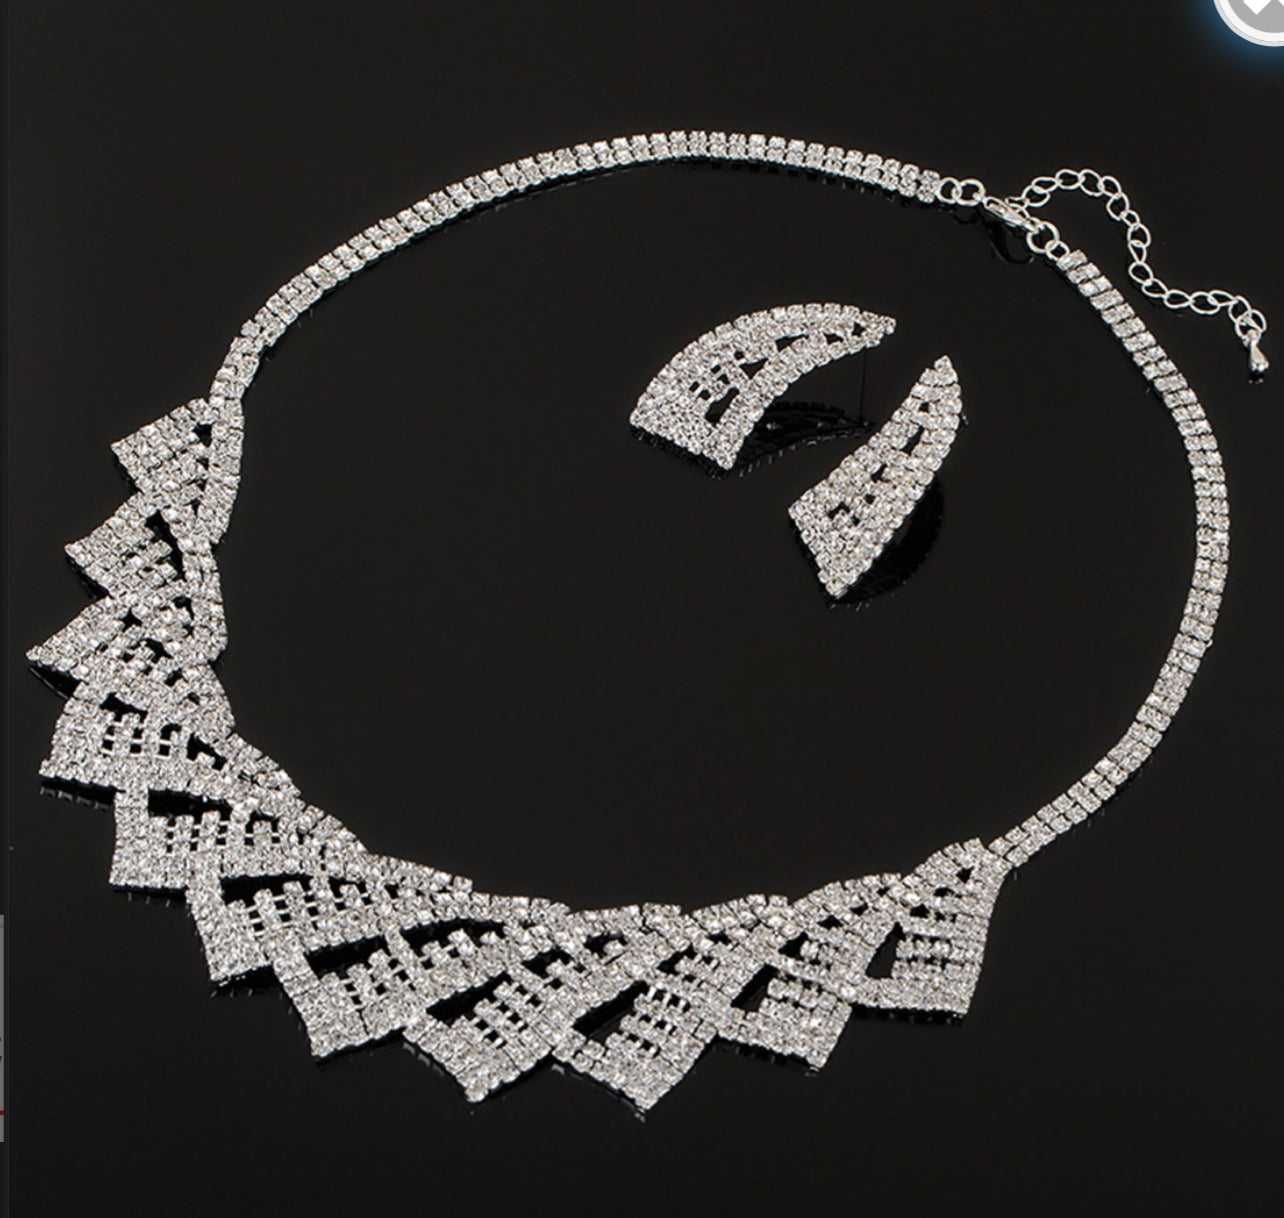 Elegant crystal rhinestone silver necklace Rhinestone Jewelry Sets earring necklace wedding engagement Length:Approx 17.5 “